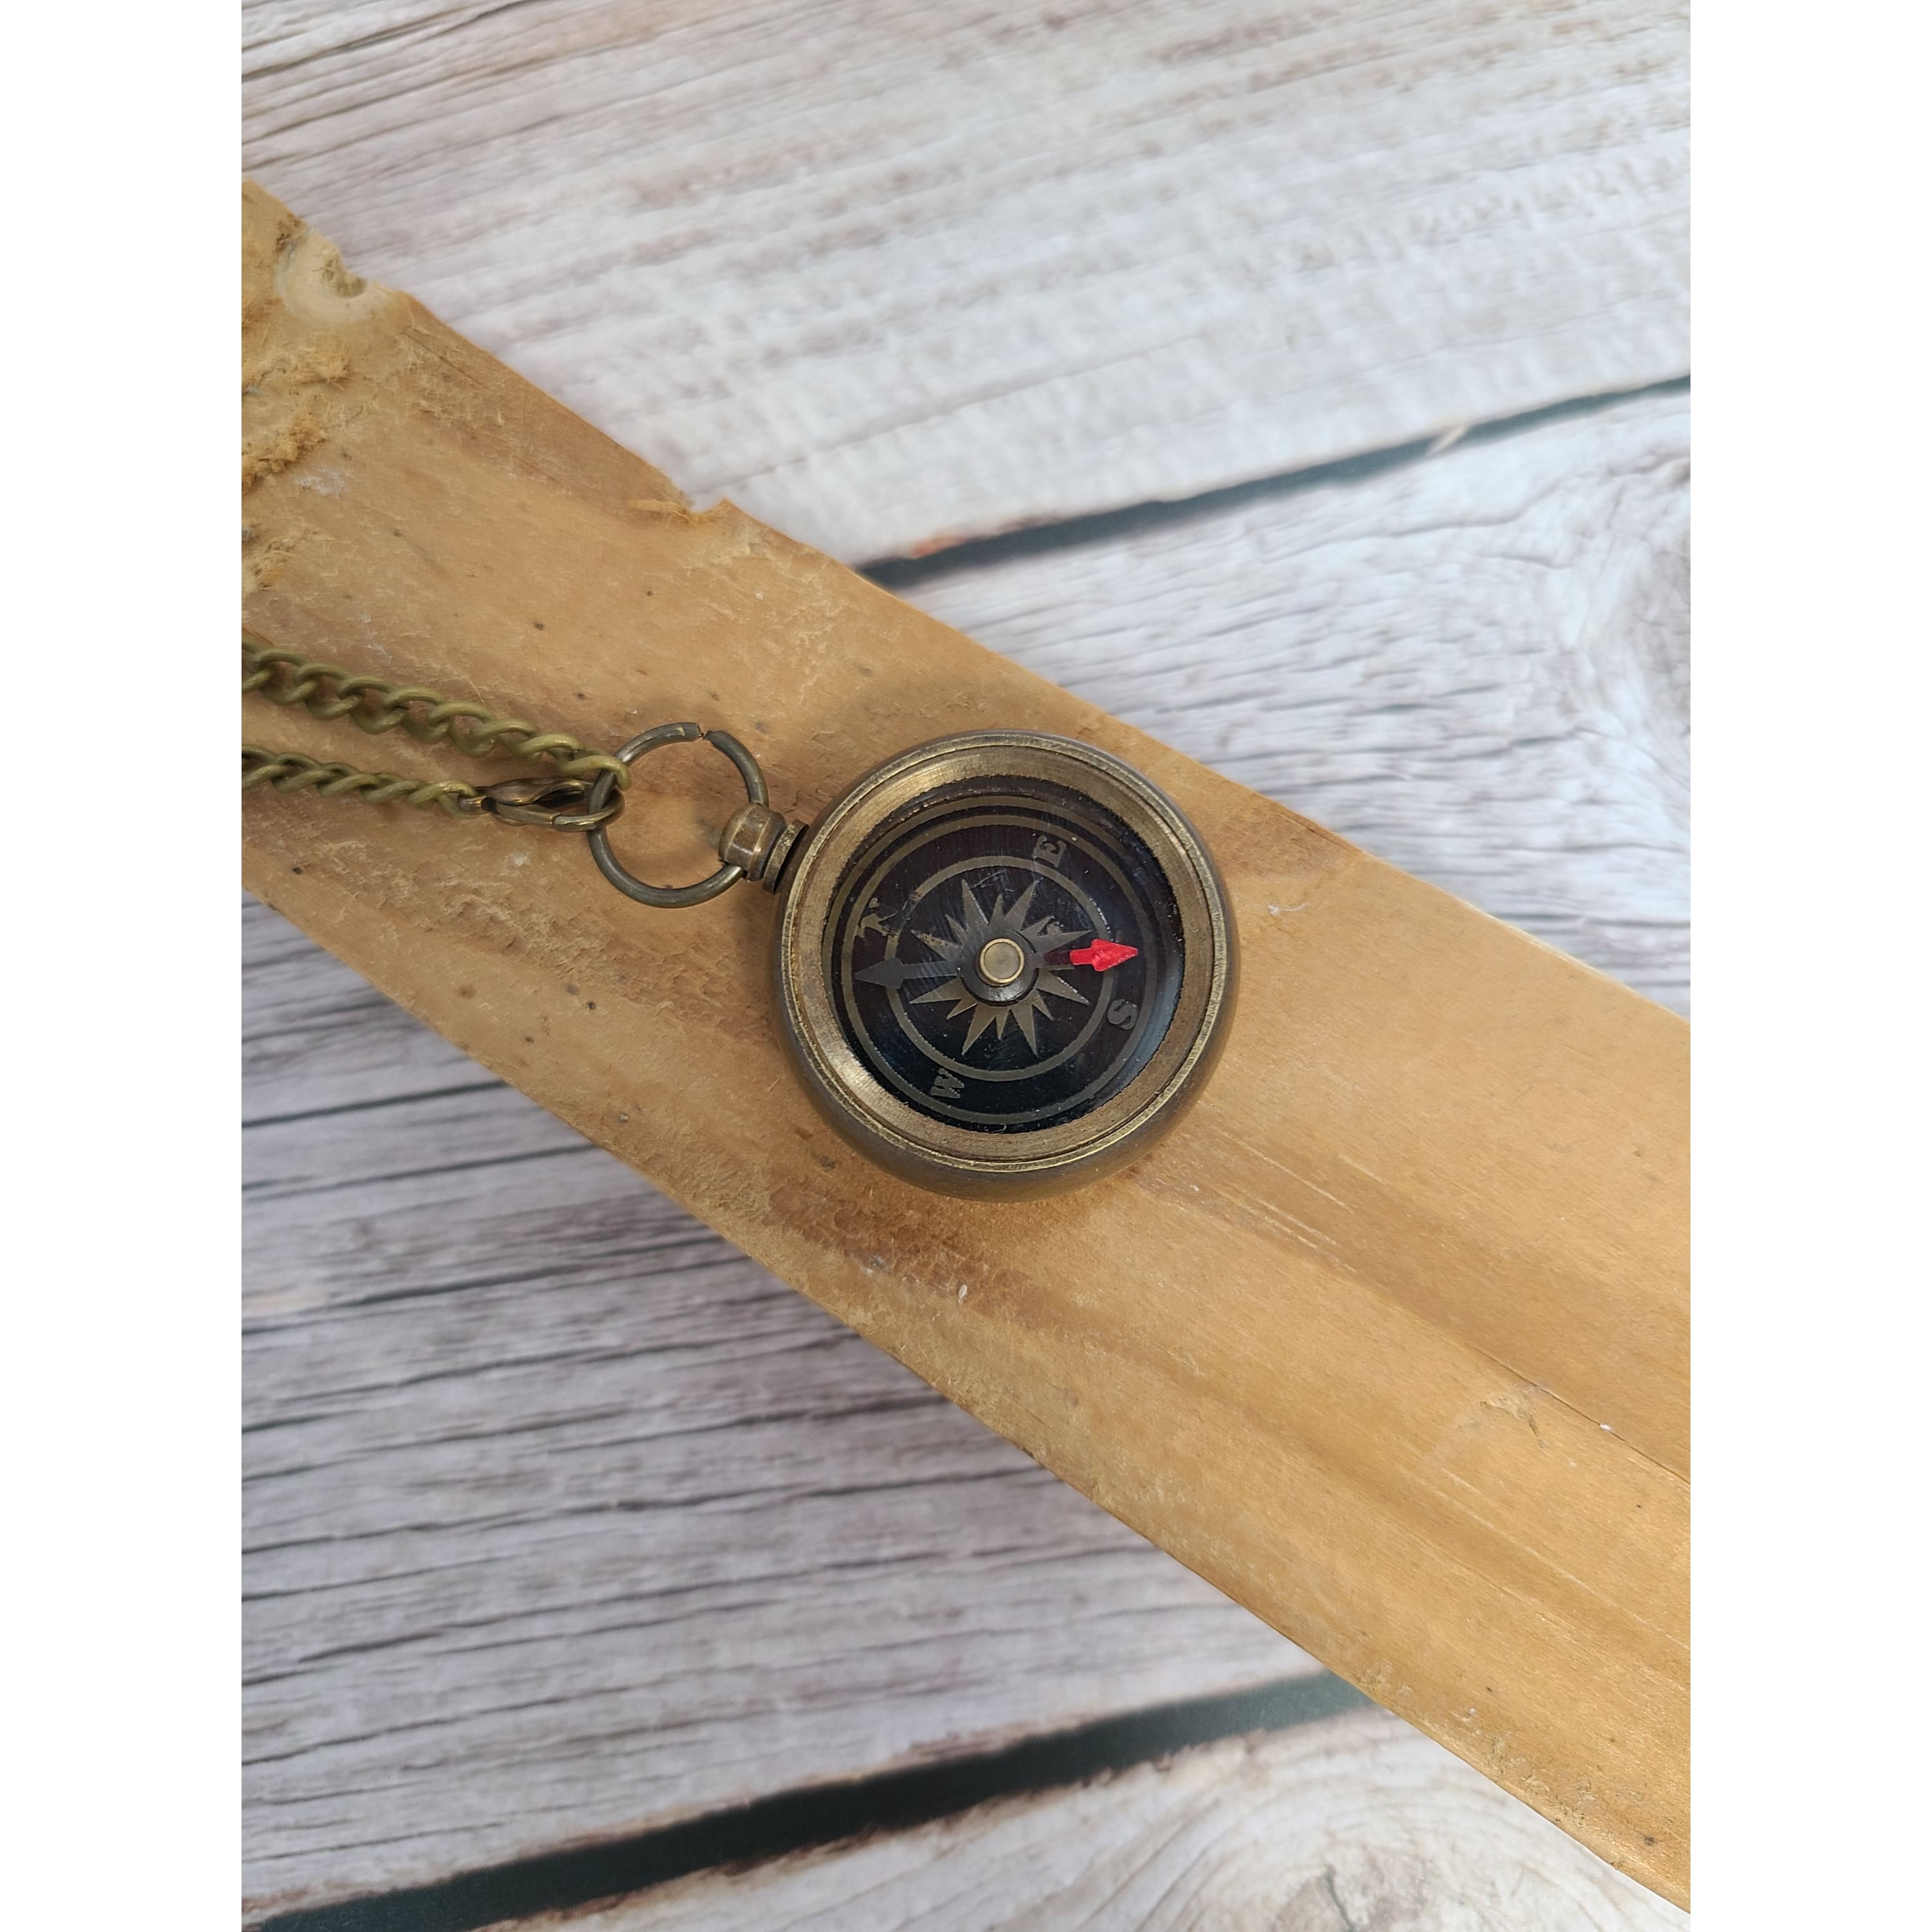 Antique Compass, Compass Necklace, Vintage Compass, Compass with